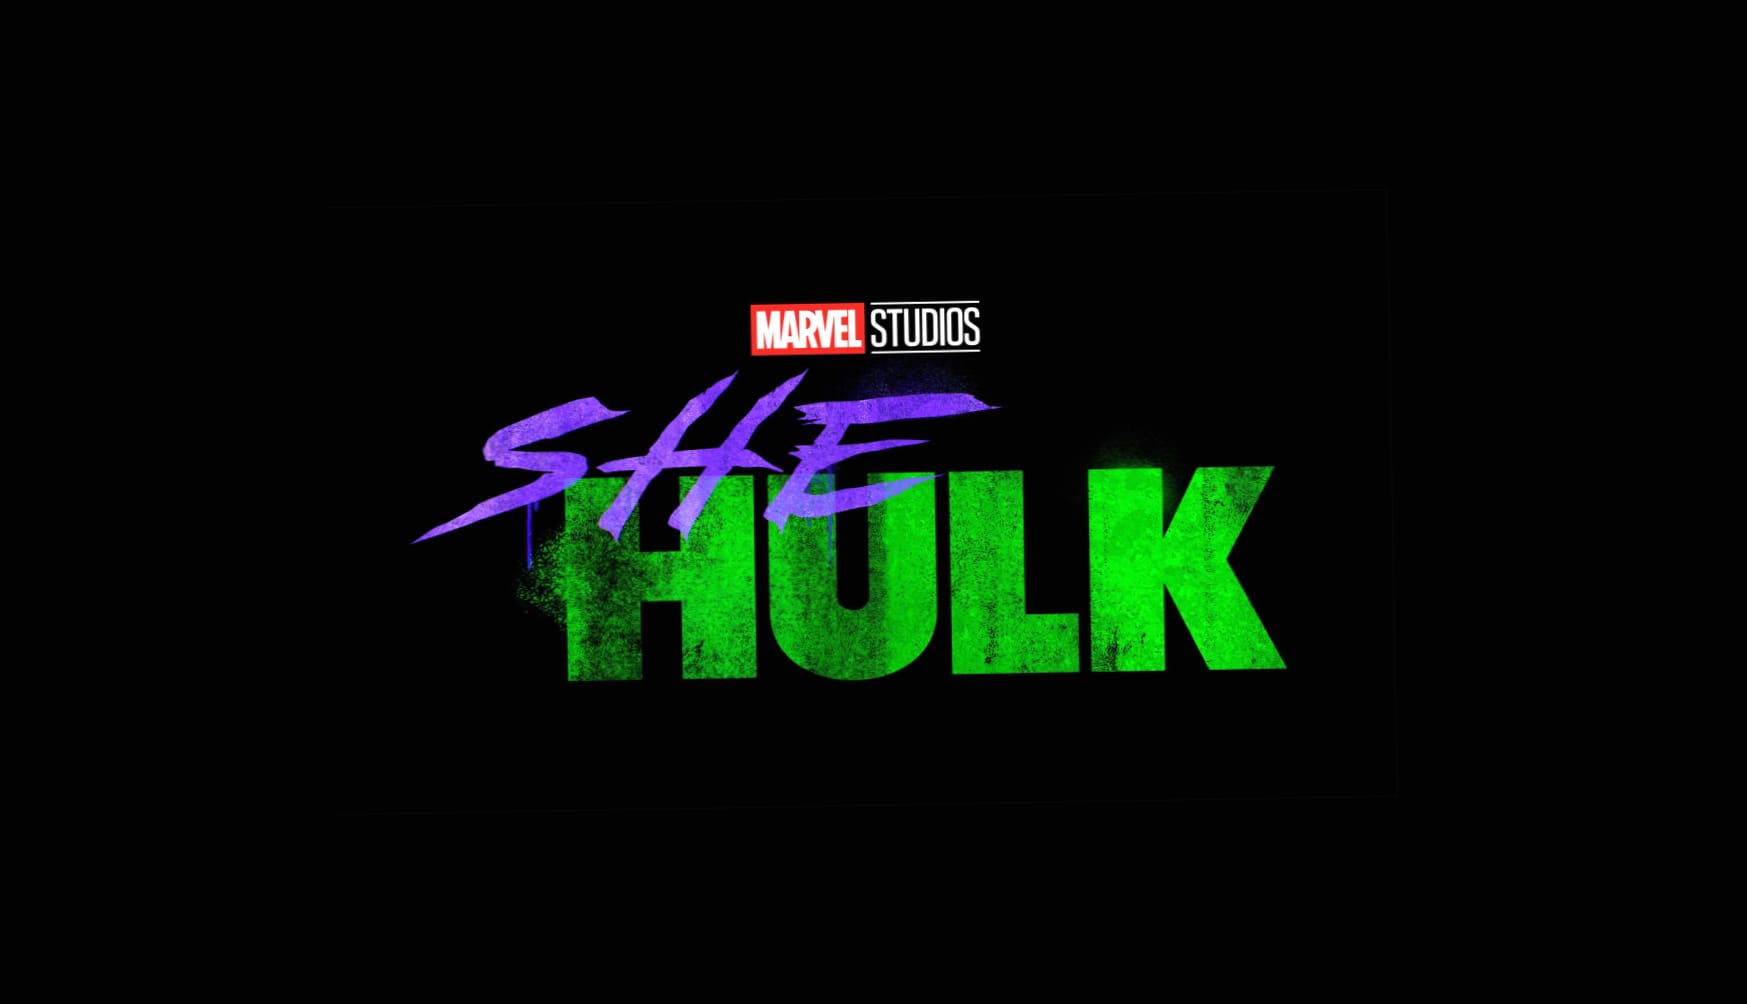 She-Hulk at 1024 x 1024 iPad size wallpapers HD quality